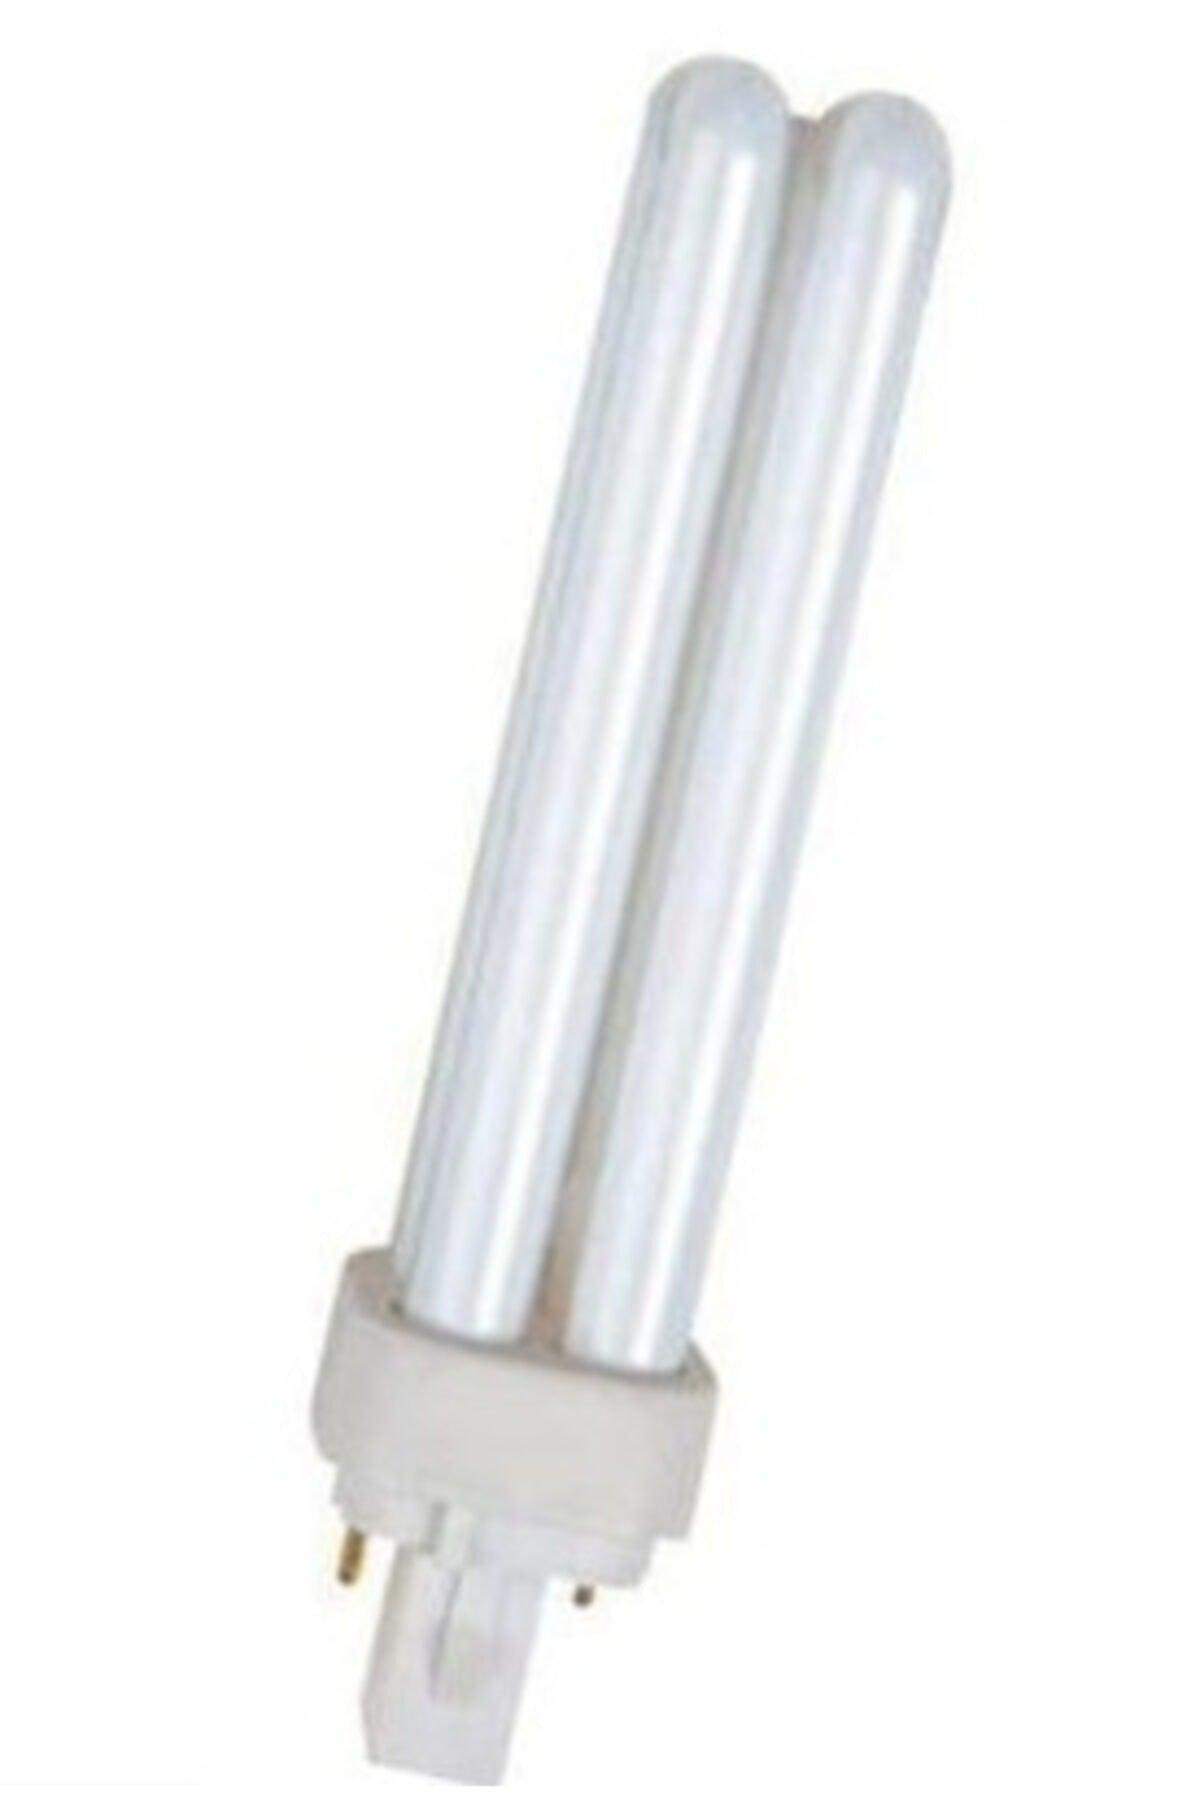 26w 840 2pin Plc Bulb Daylight 4000 Kelvin